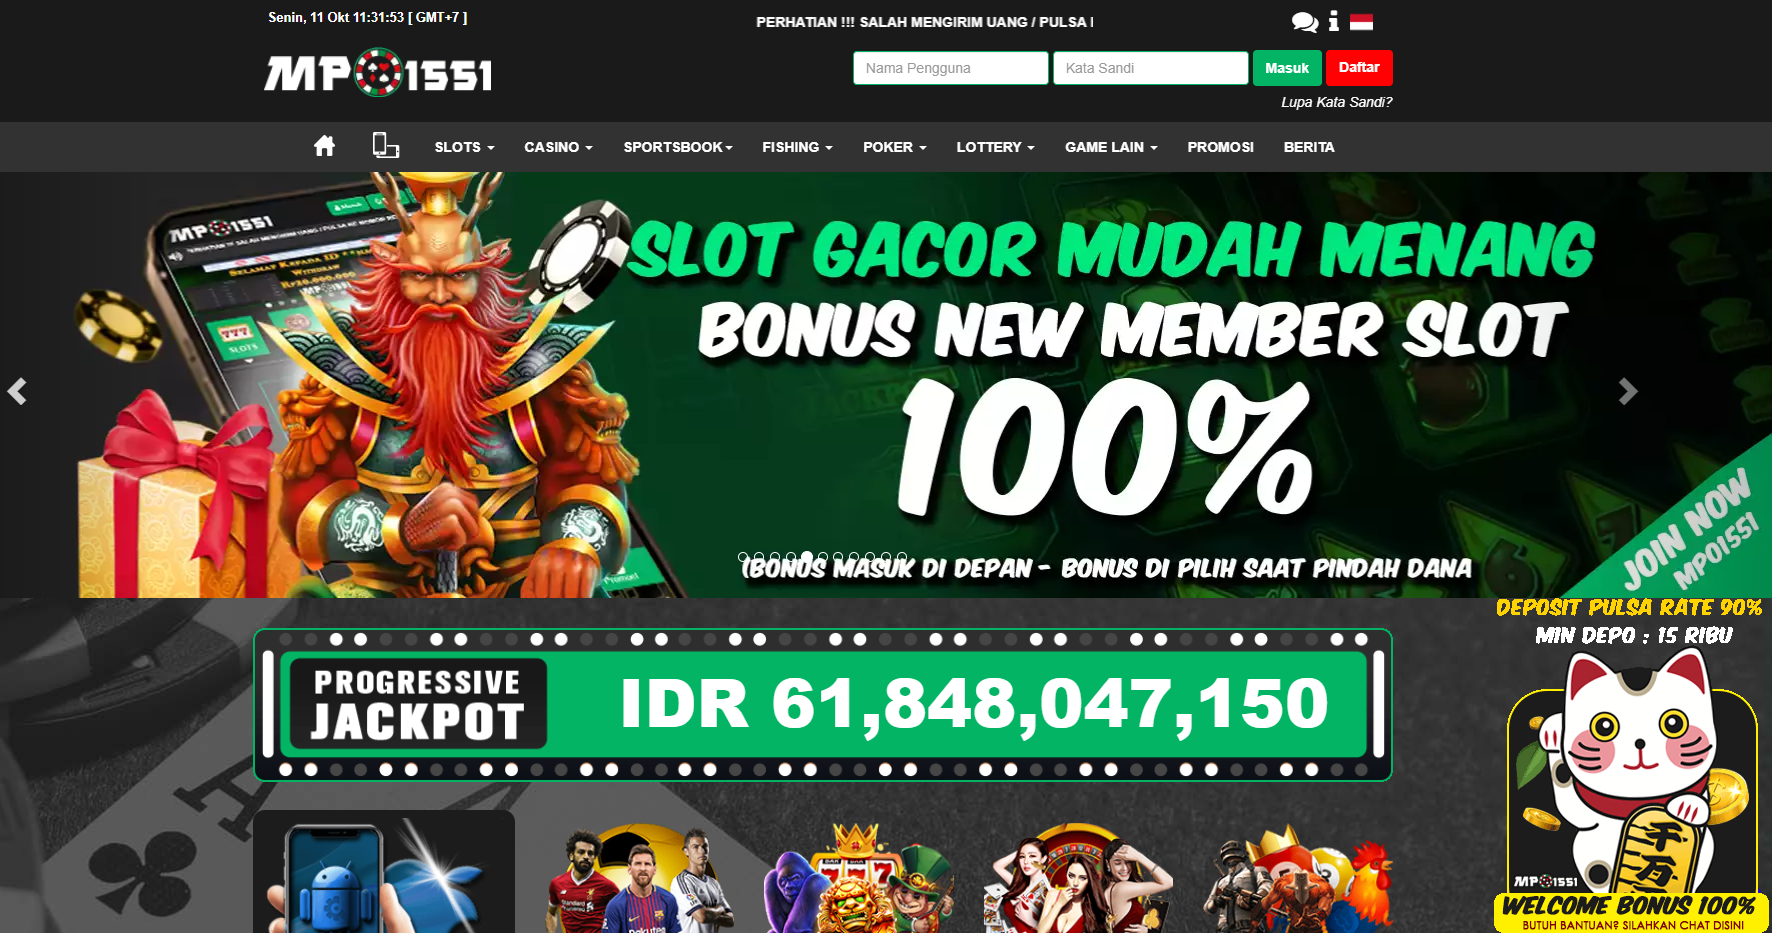 MPO1551 Situs Judi Mpo Slot Online Deposit DANA Terpercaya